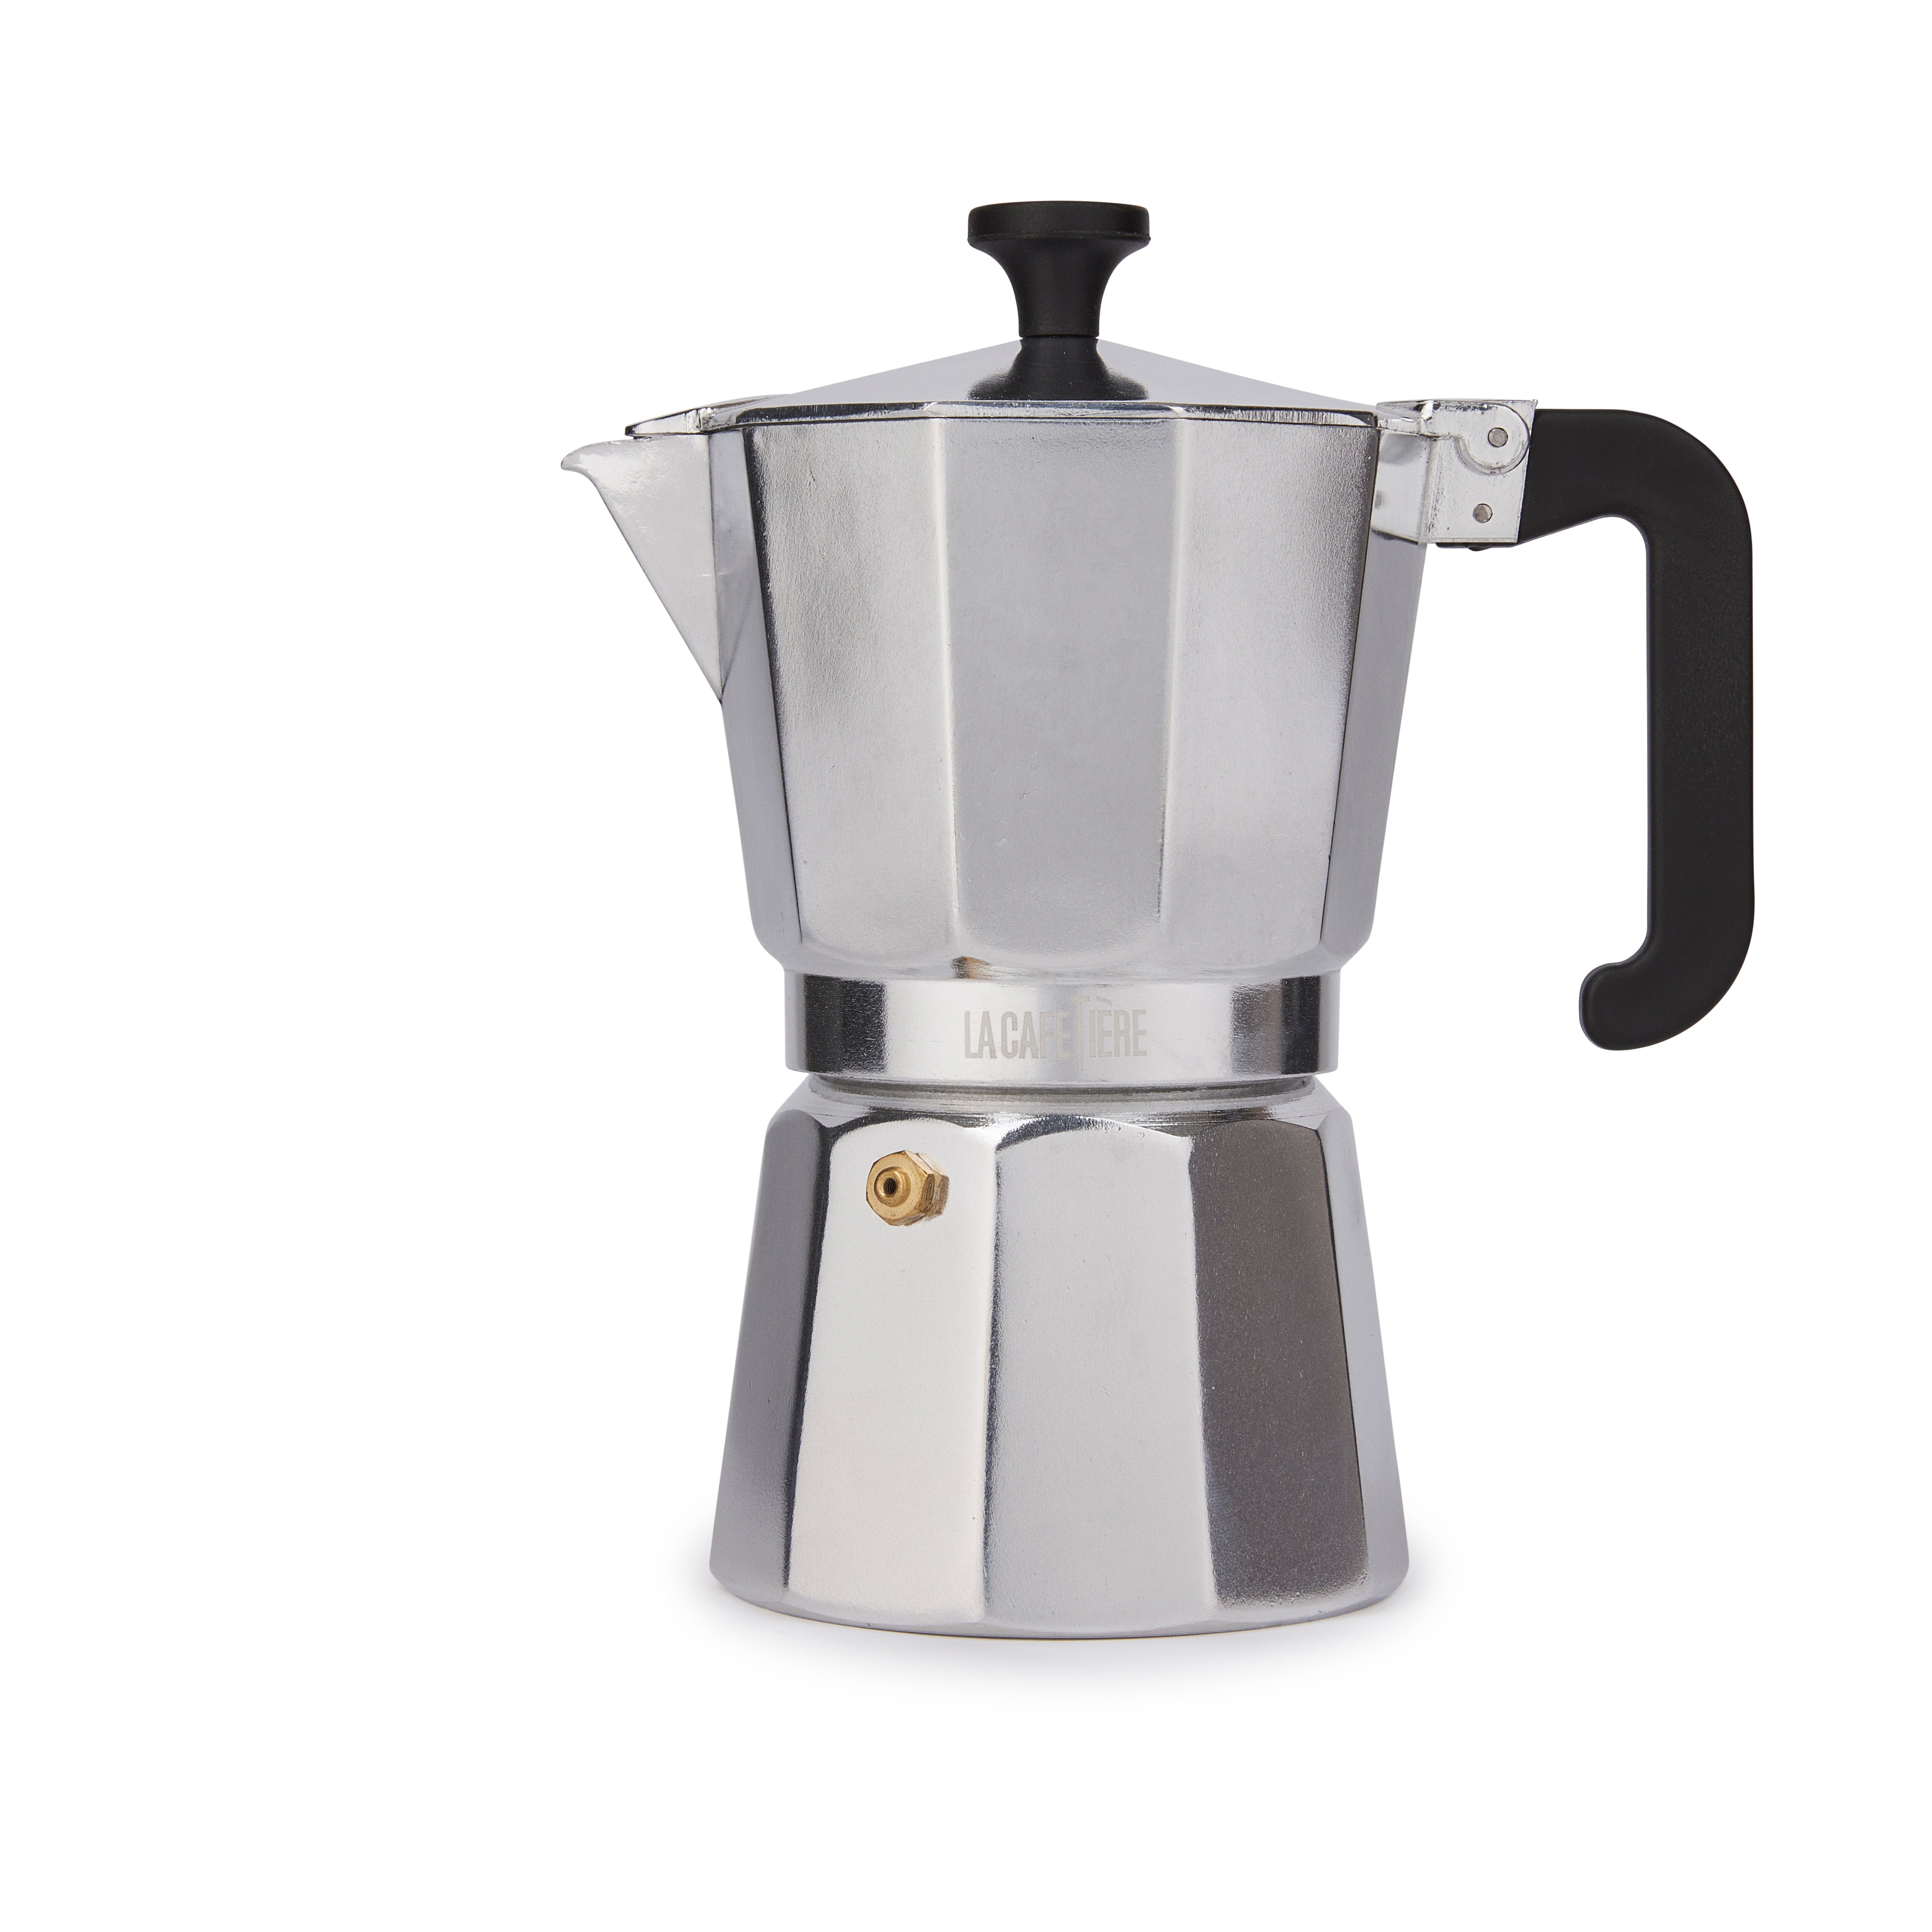 Espresso | La Cup 6 Cafetiere Dunelm Cafetiere